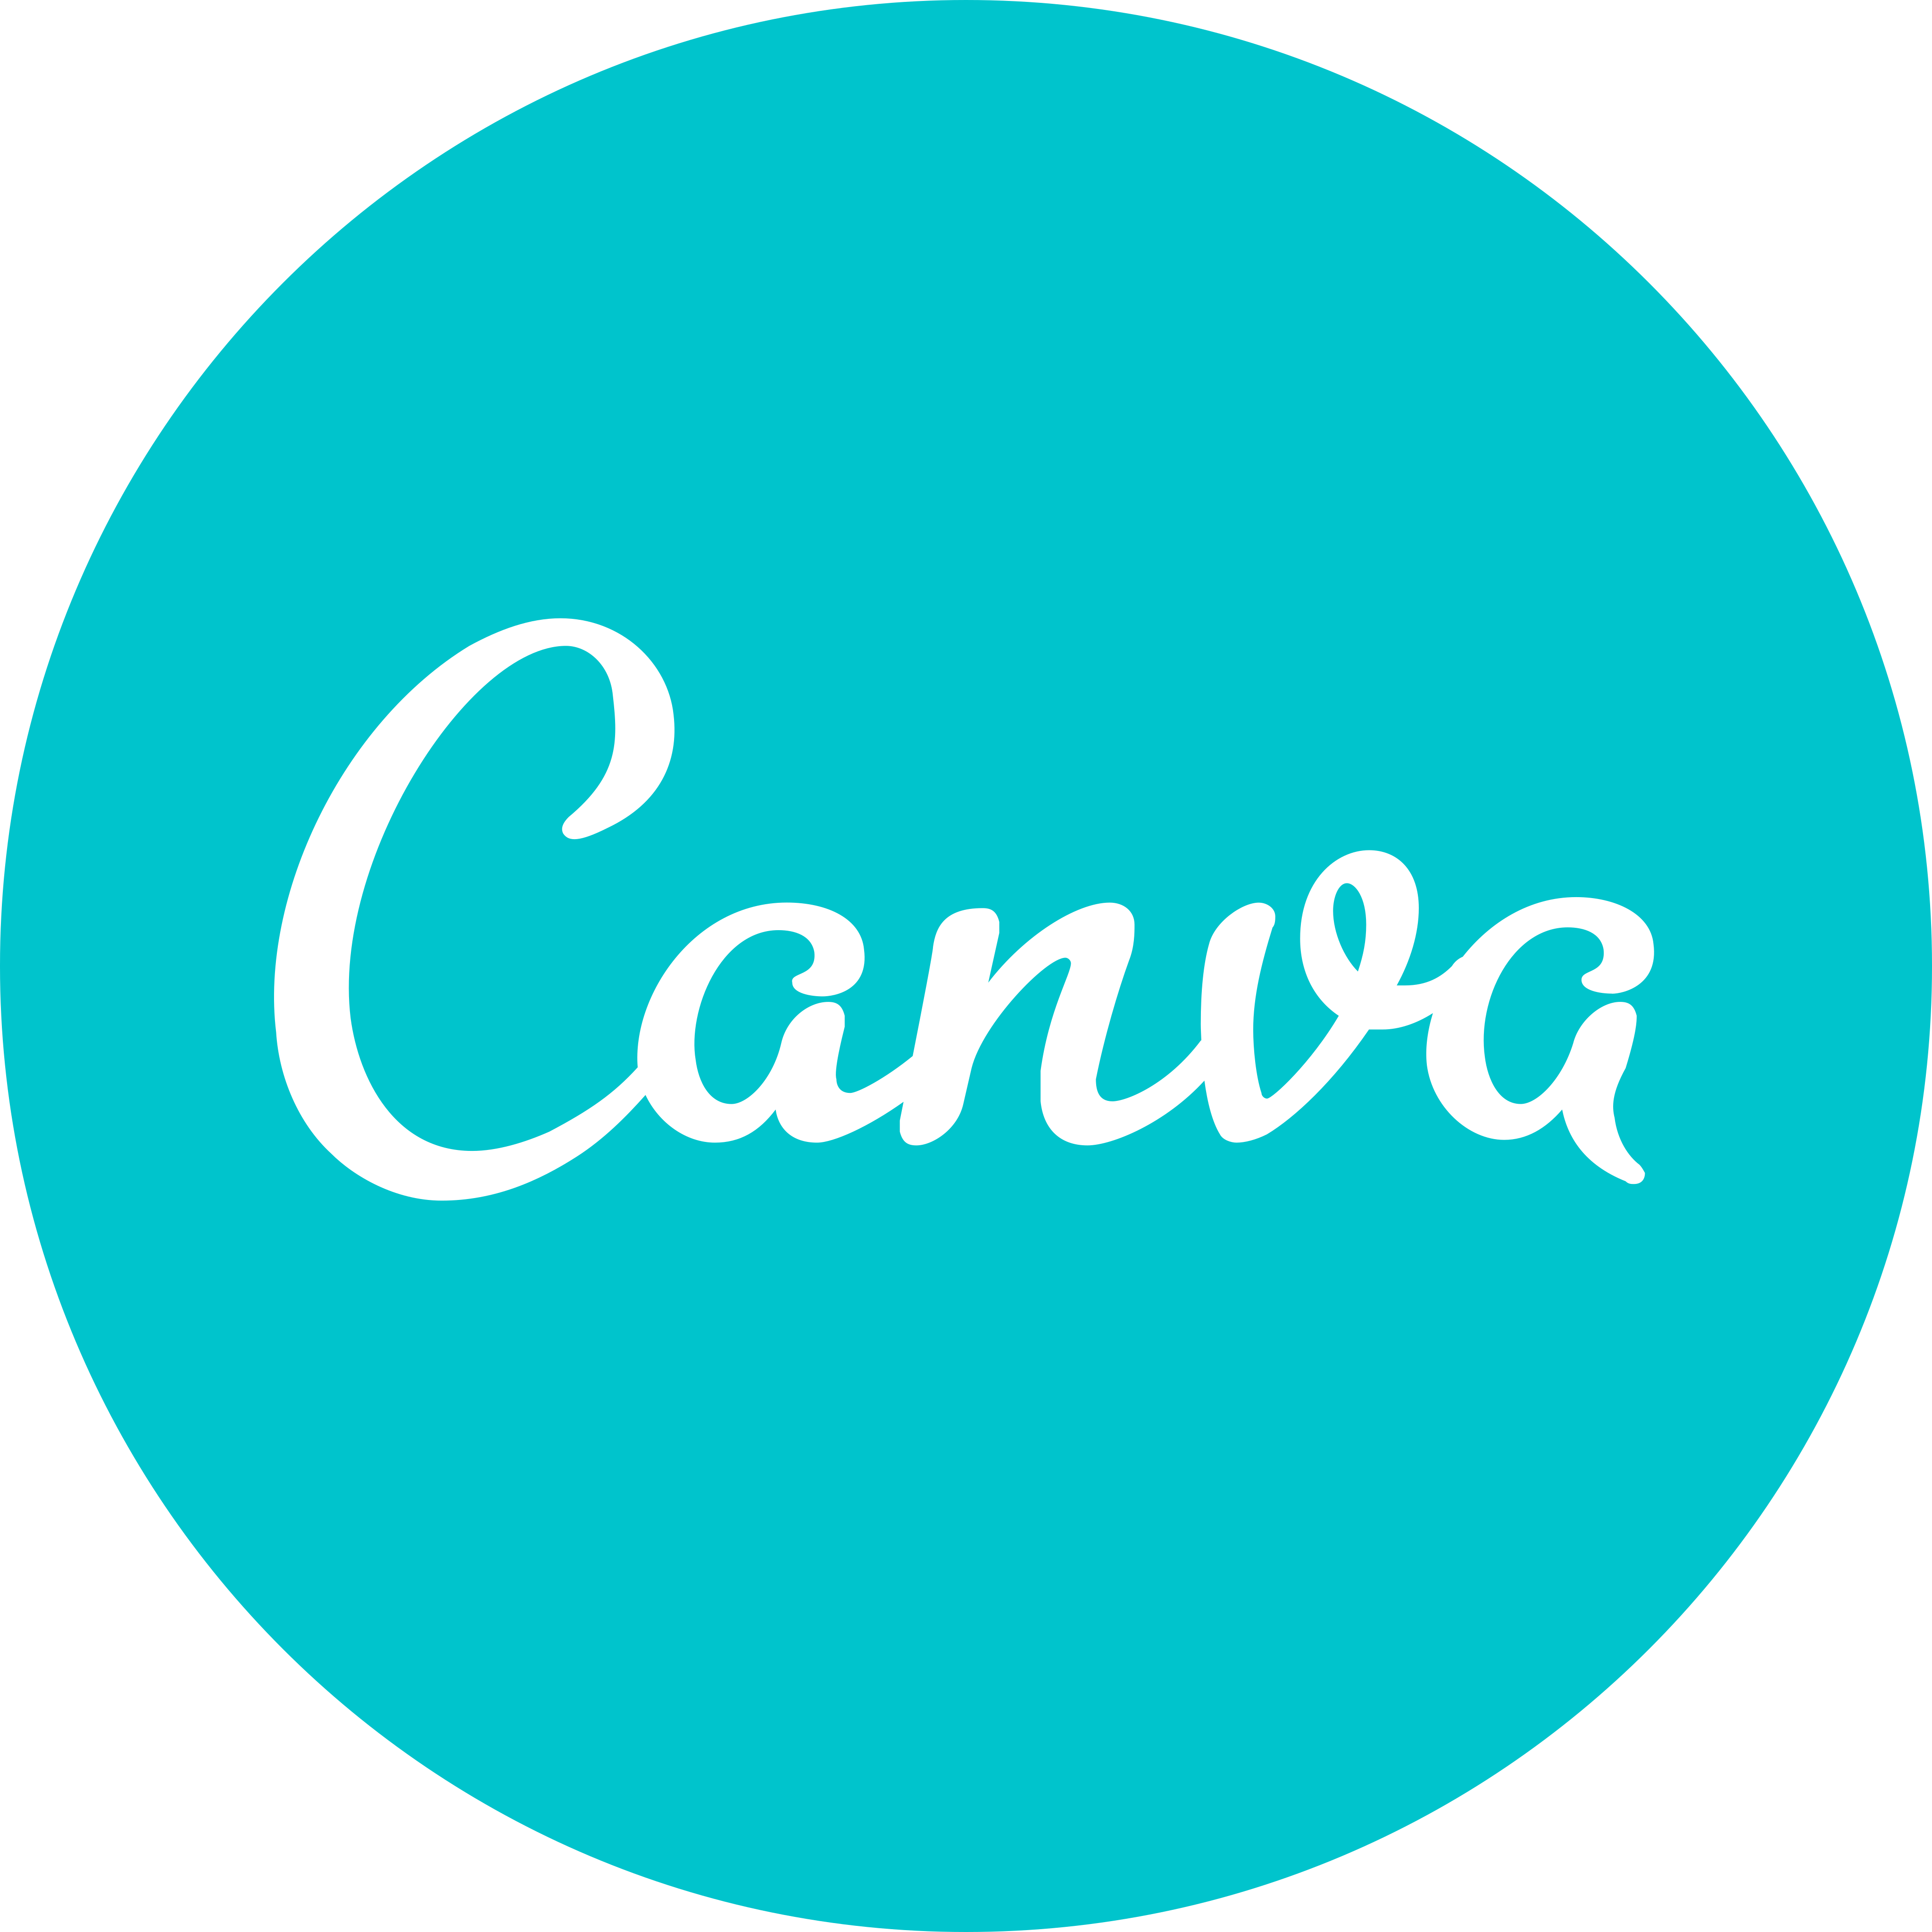 Exporter_son_design_-_Canva_canva-logo.png